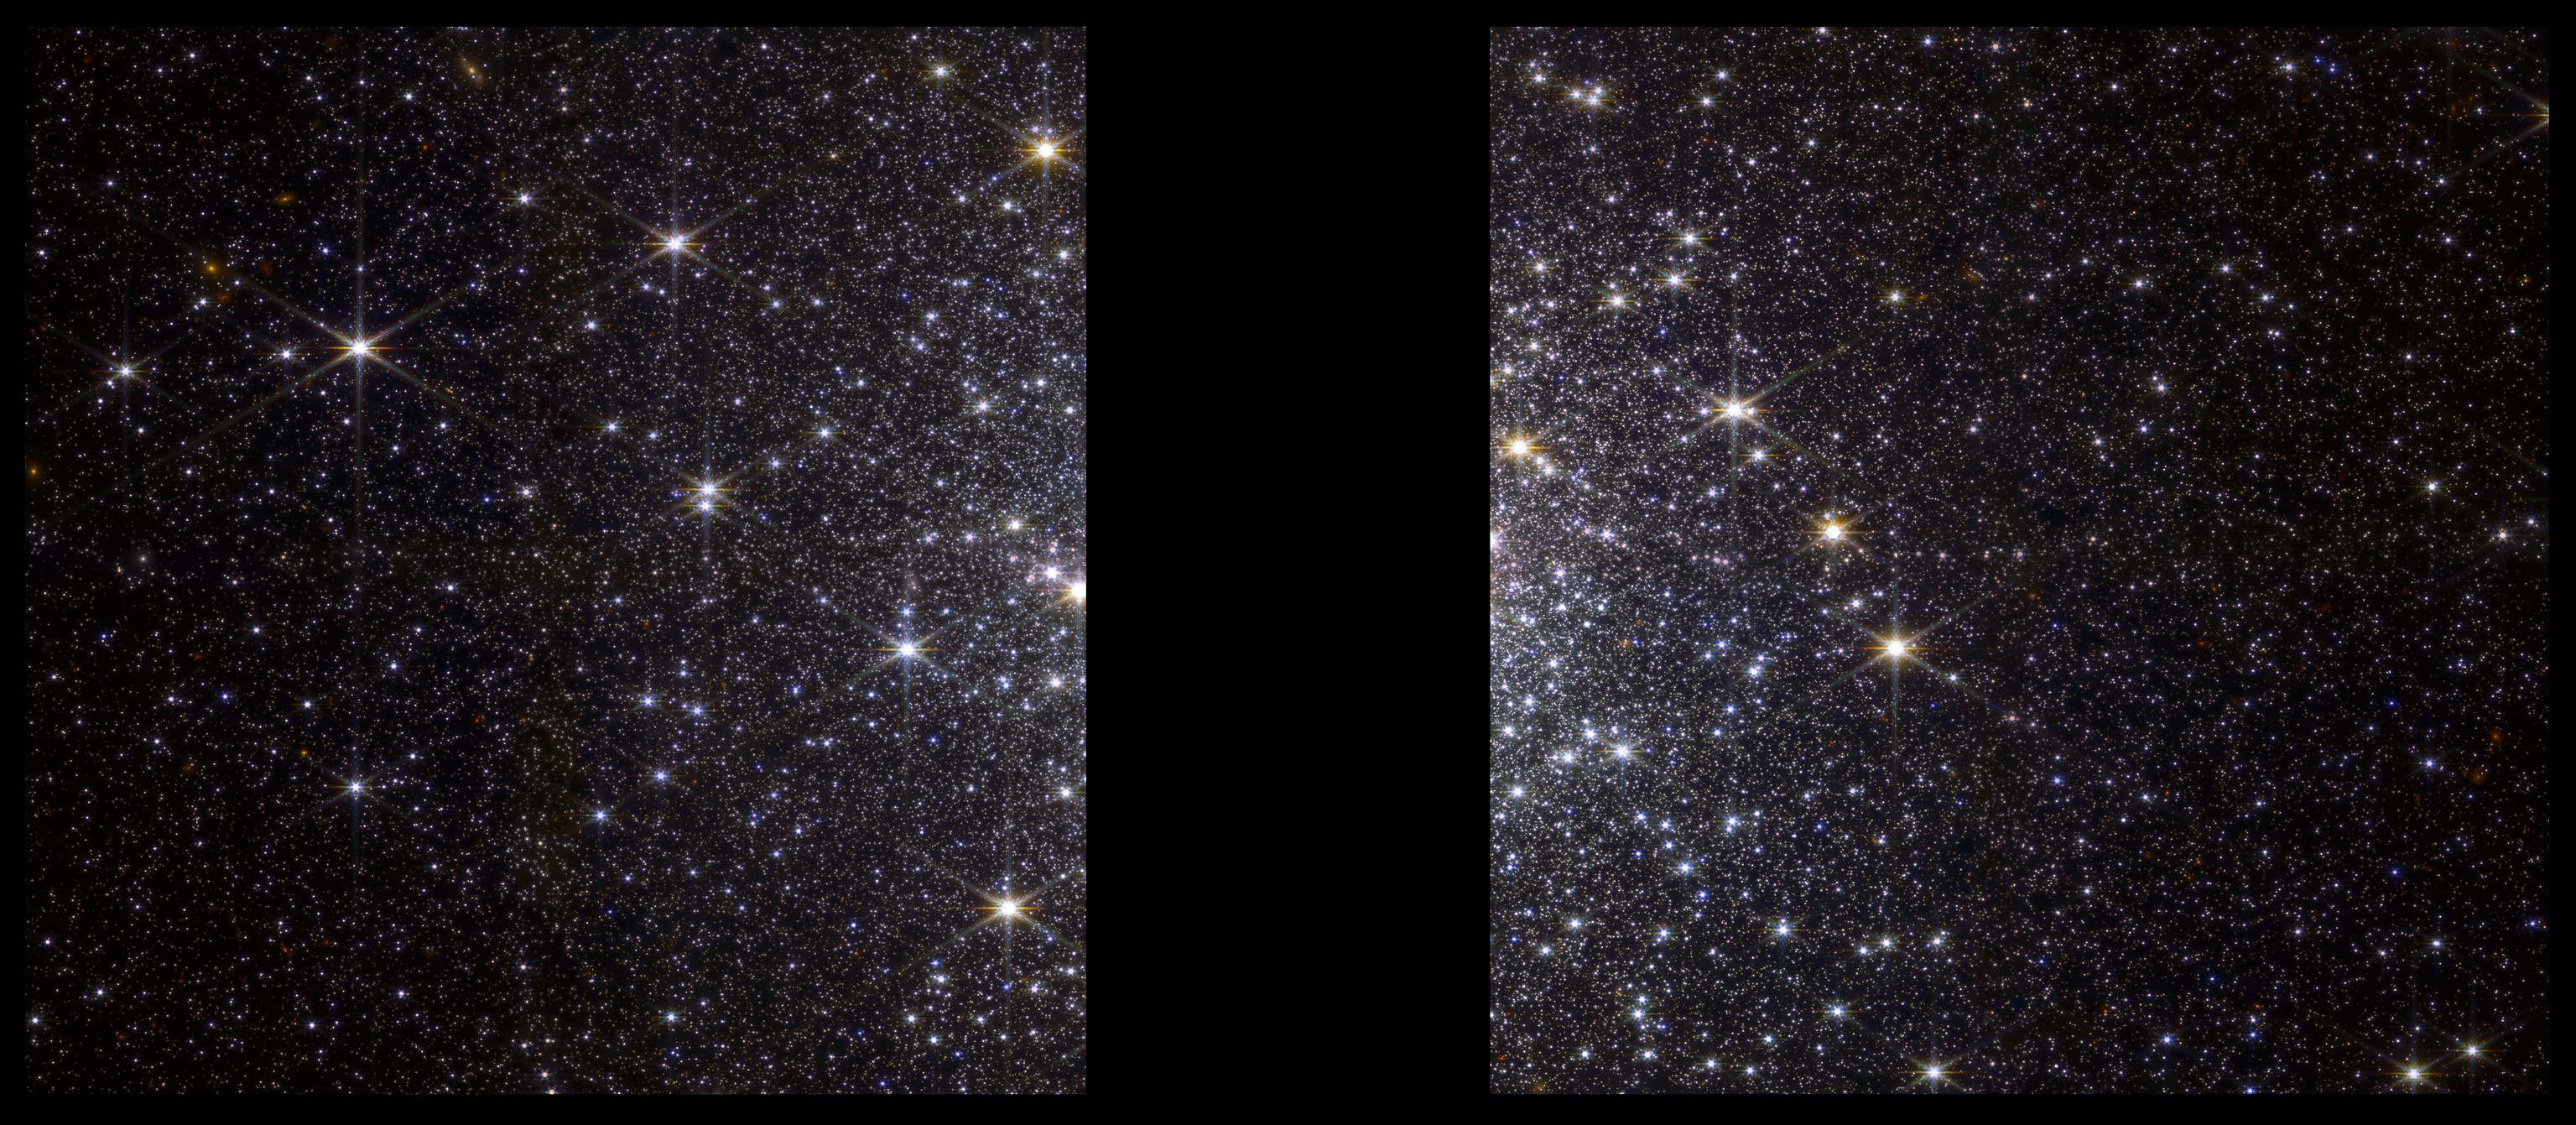 Webb Observes a Globular Cluster Sparkling with Separate Stars